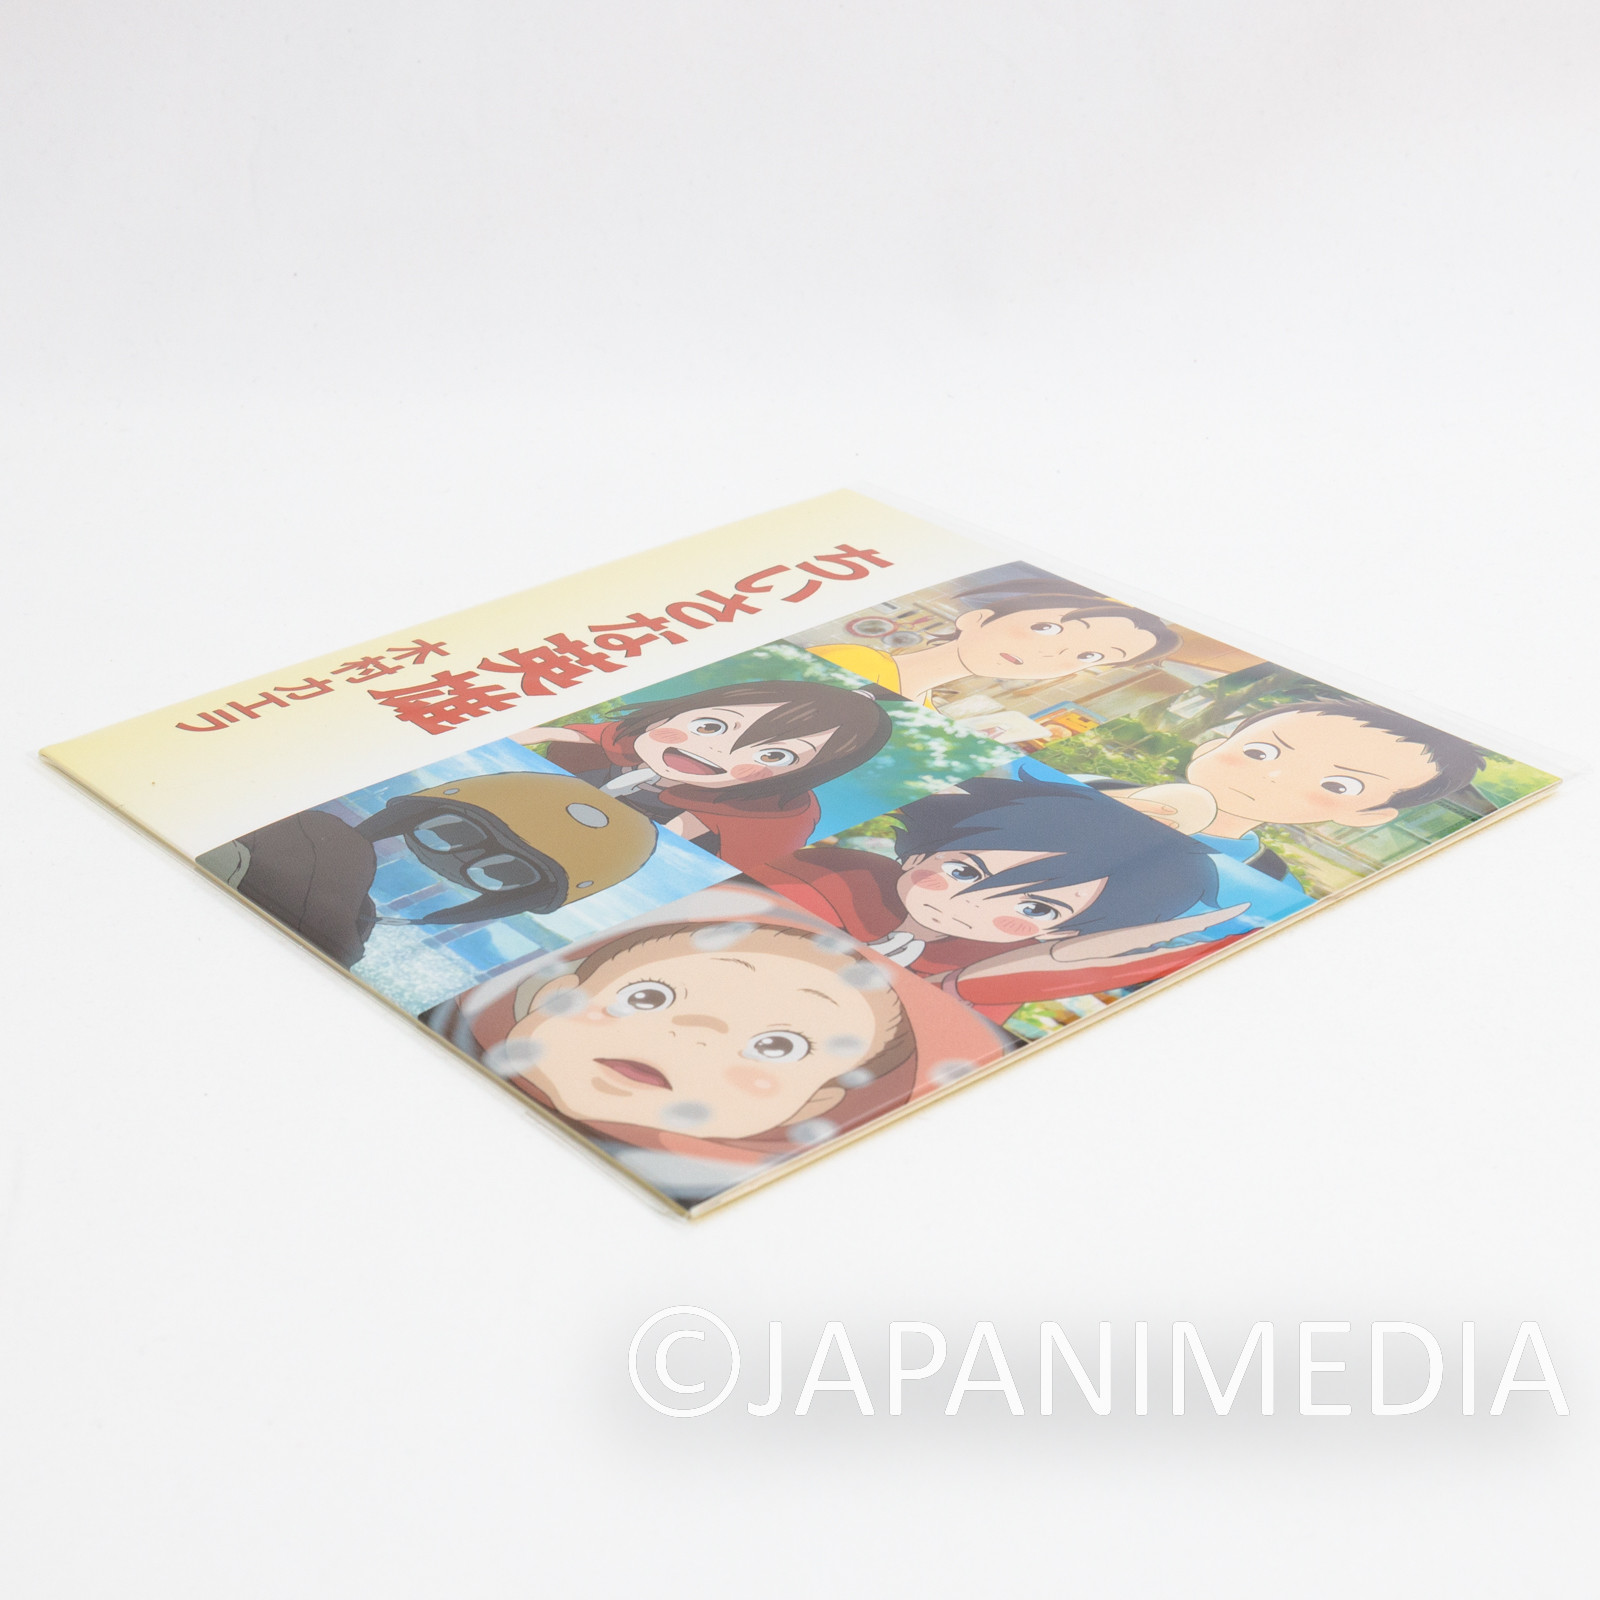 Modest Heroes "Chiisana Eiyu" Kaera Kimura 7" Vinyl EP Record HR7S-107 PONOC